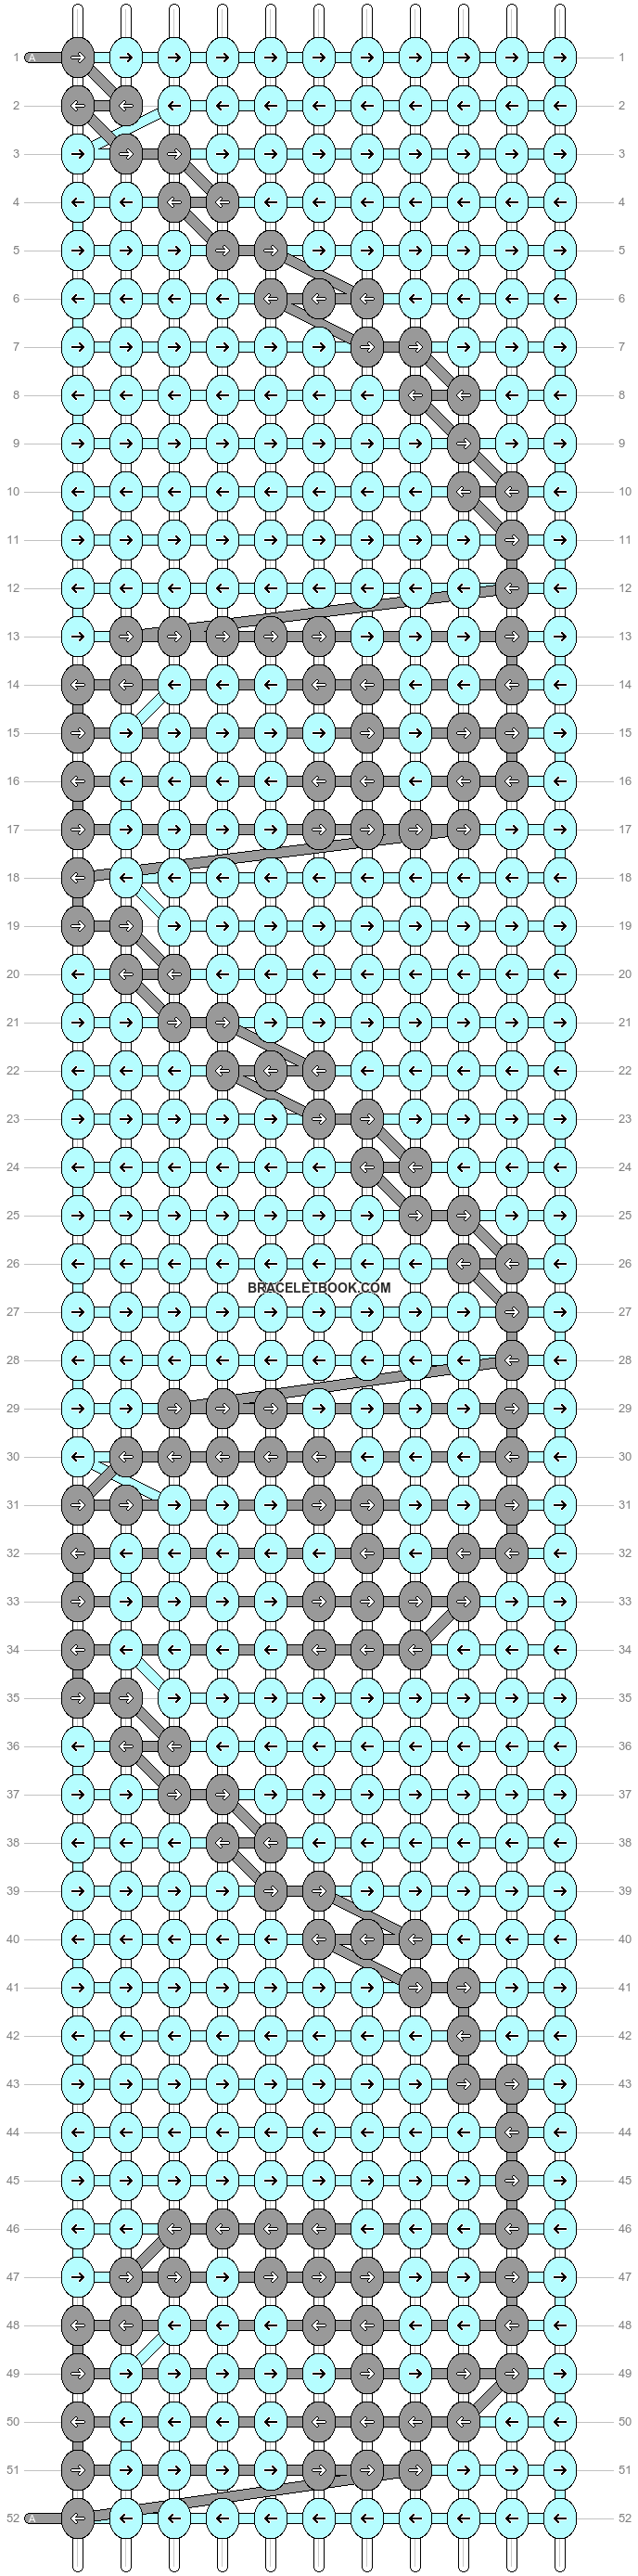 Alpha pattern #45382 variation #66965 pattern